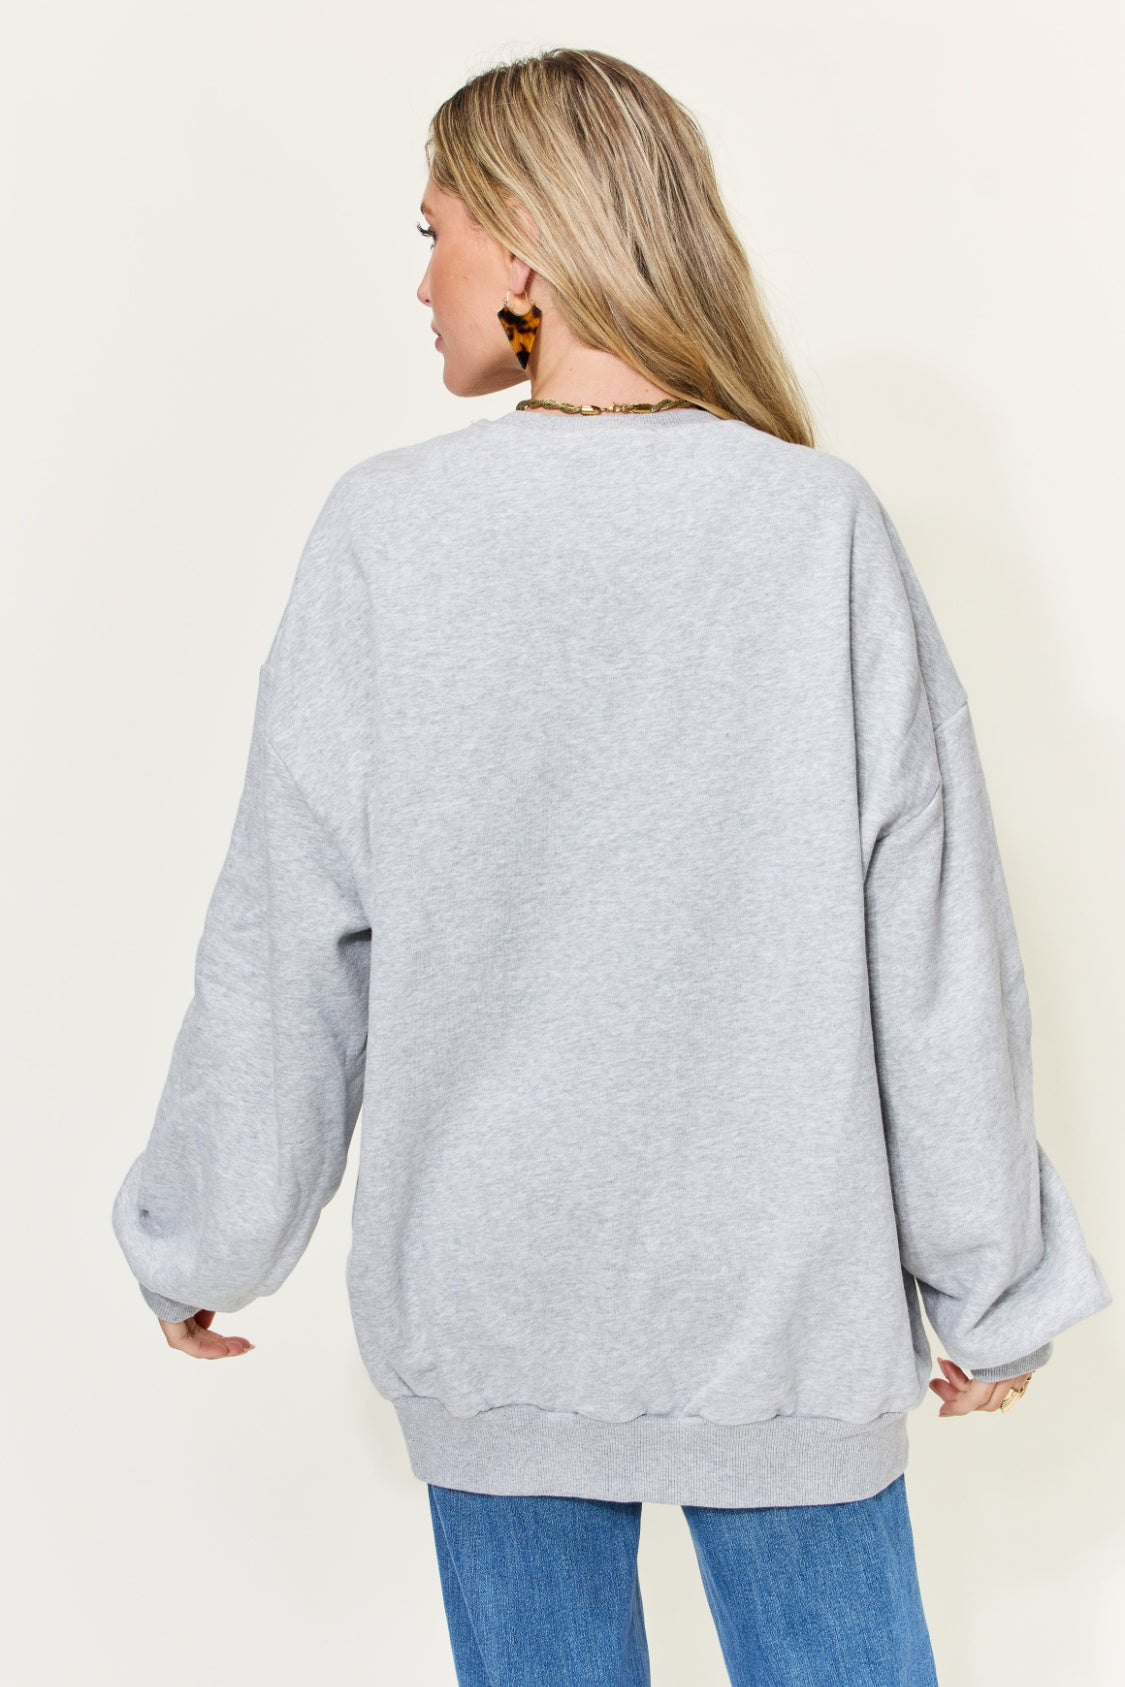 Simply Love Bow & Heart Graphic Long Sleeve Sweatshirt